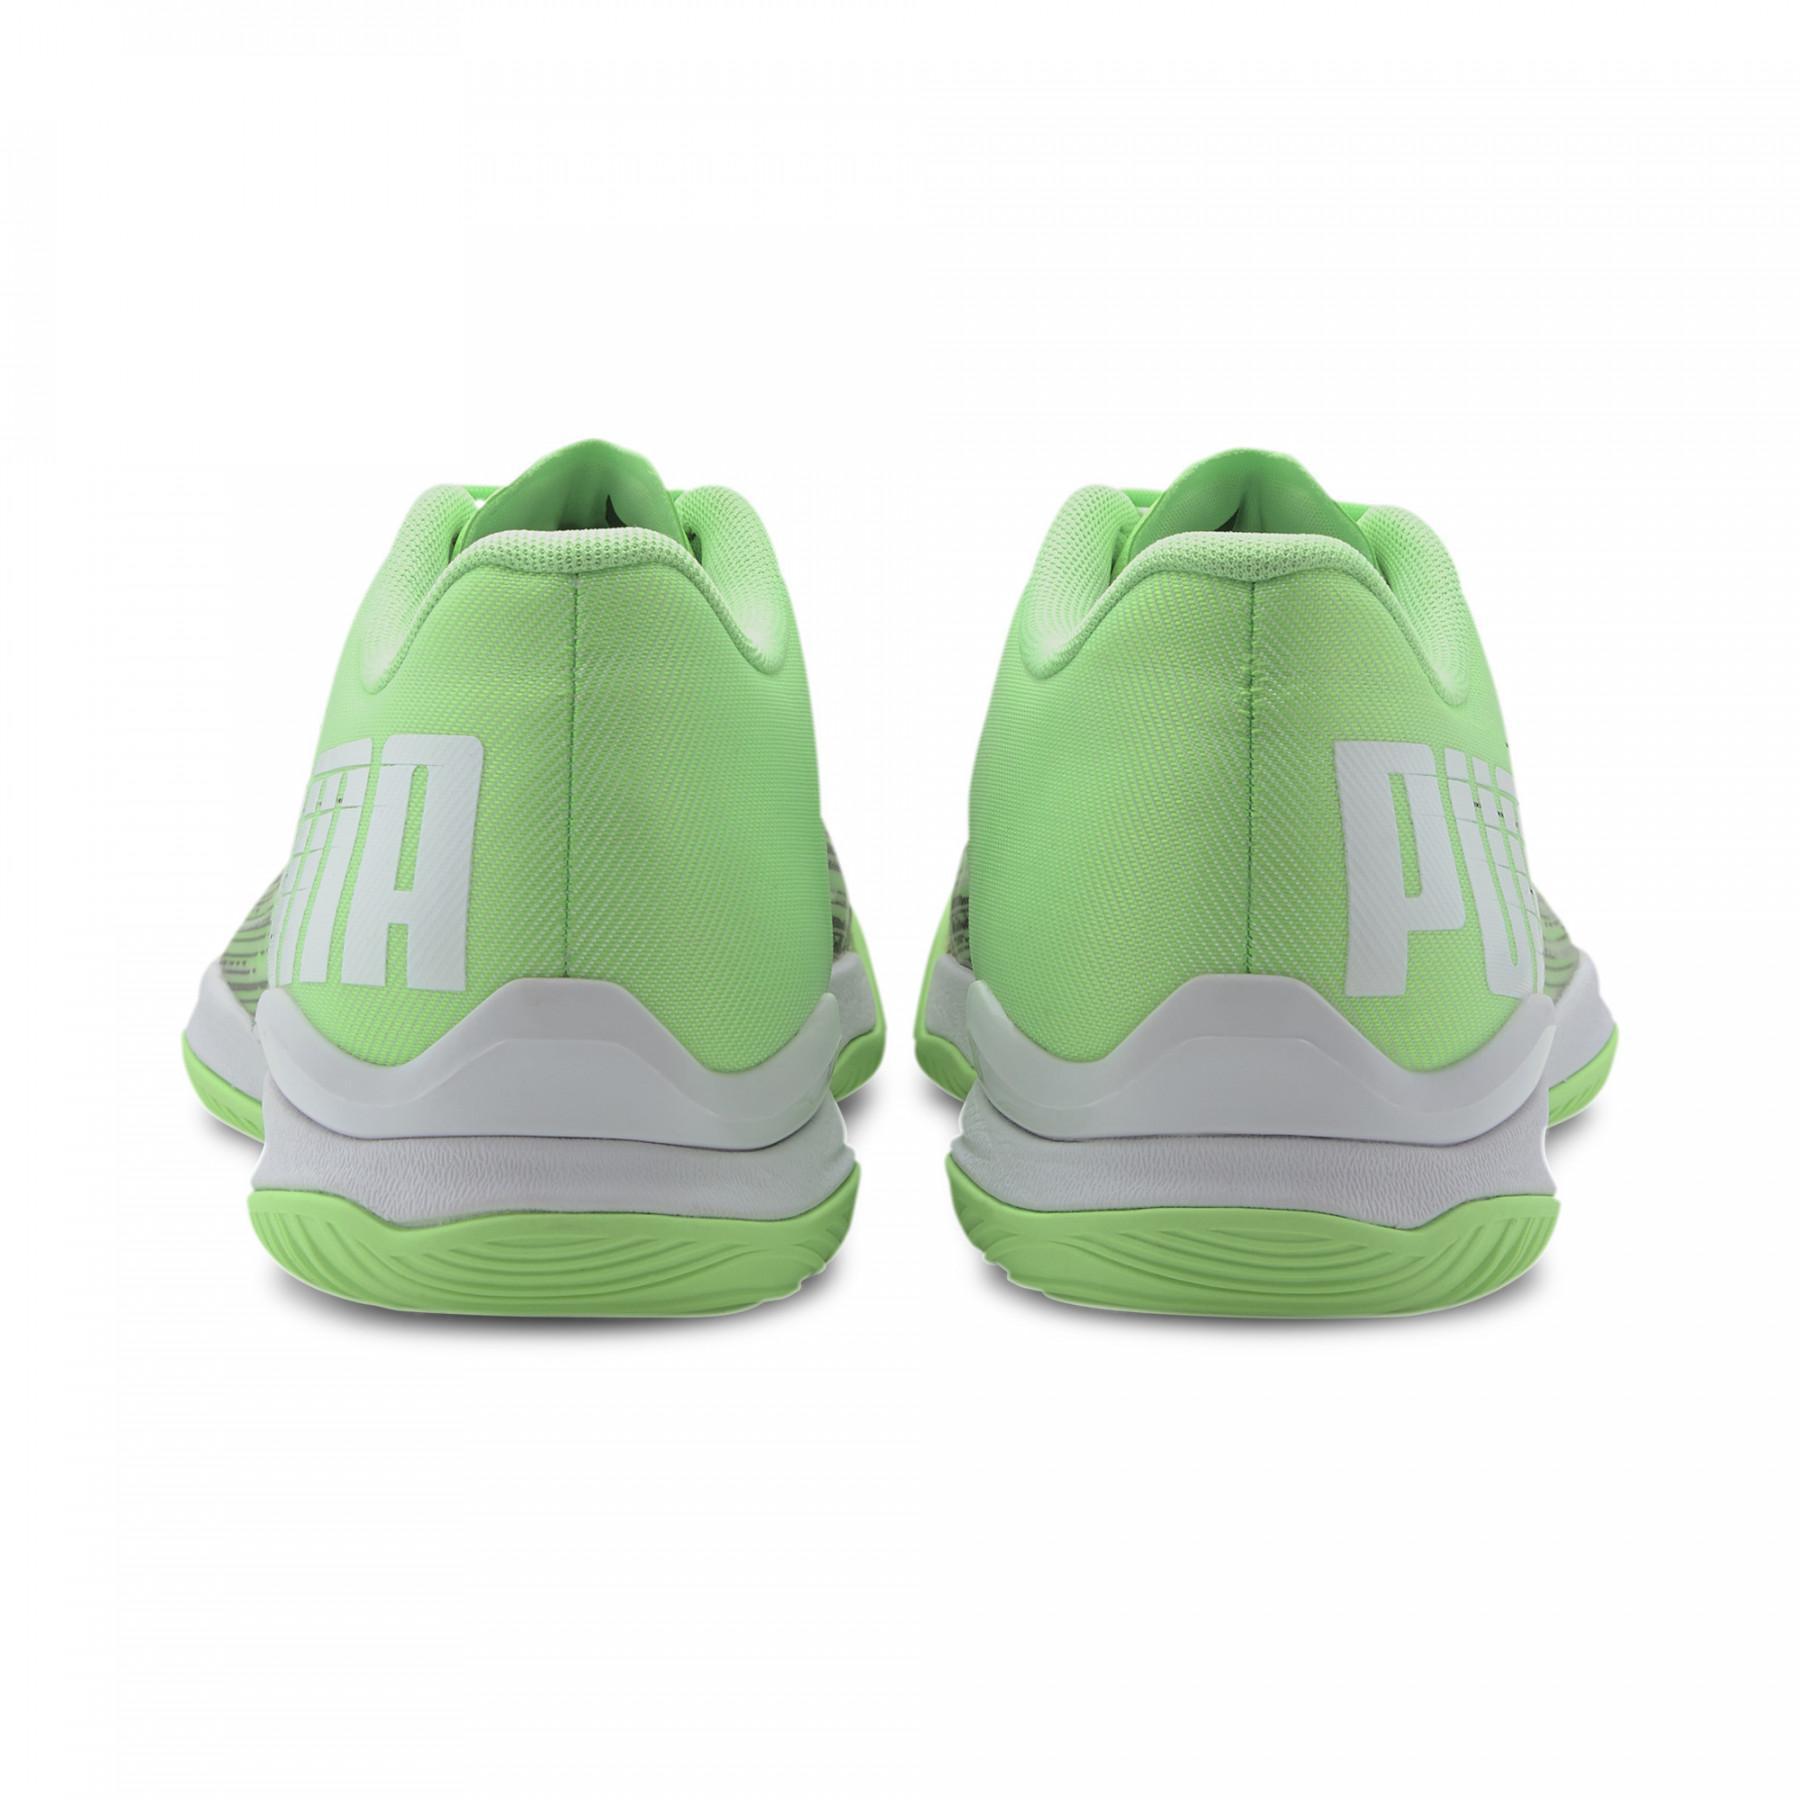 Chaussures Puma Adrenalite 2.1